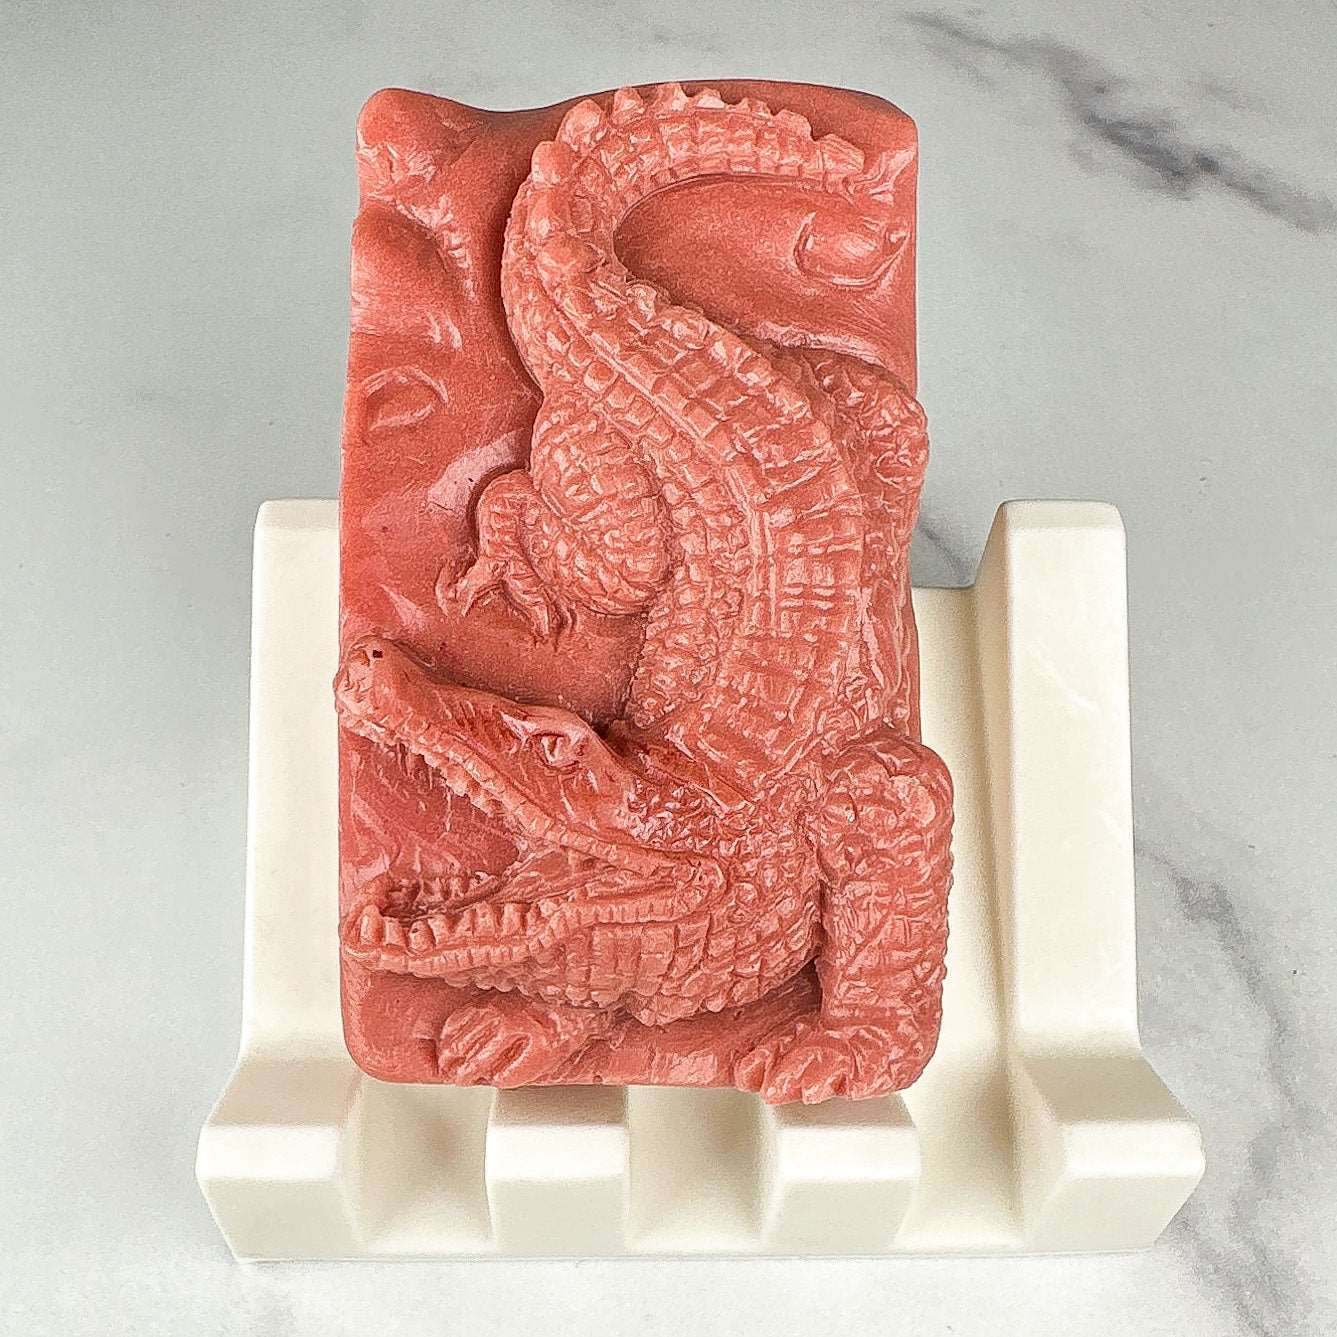 Alligator Soap Bar